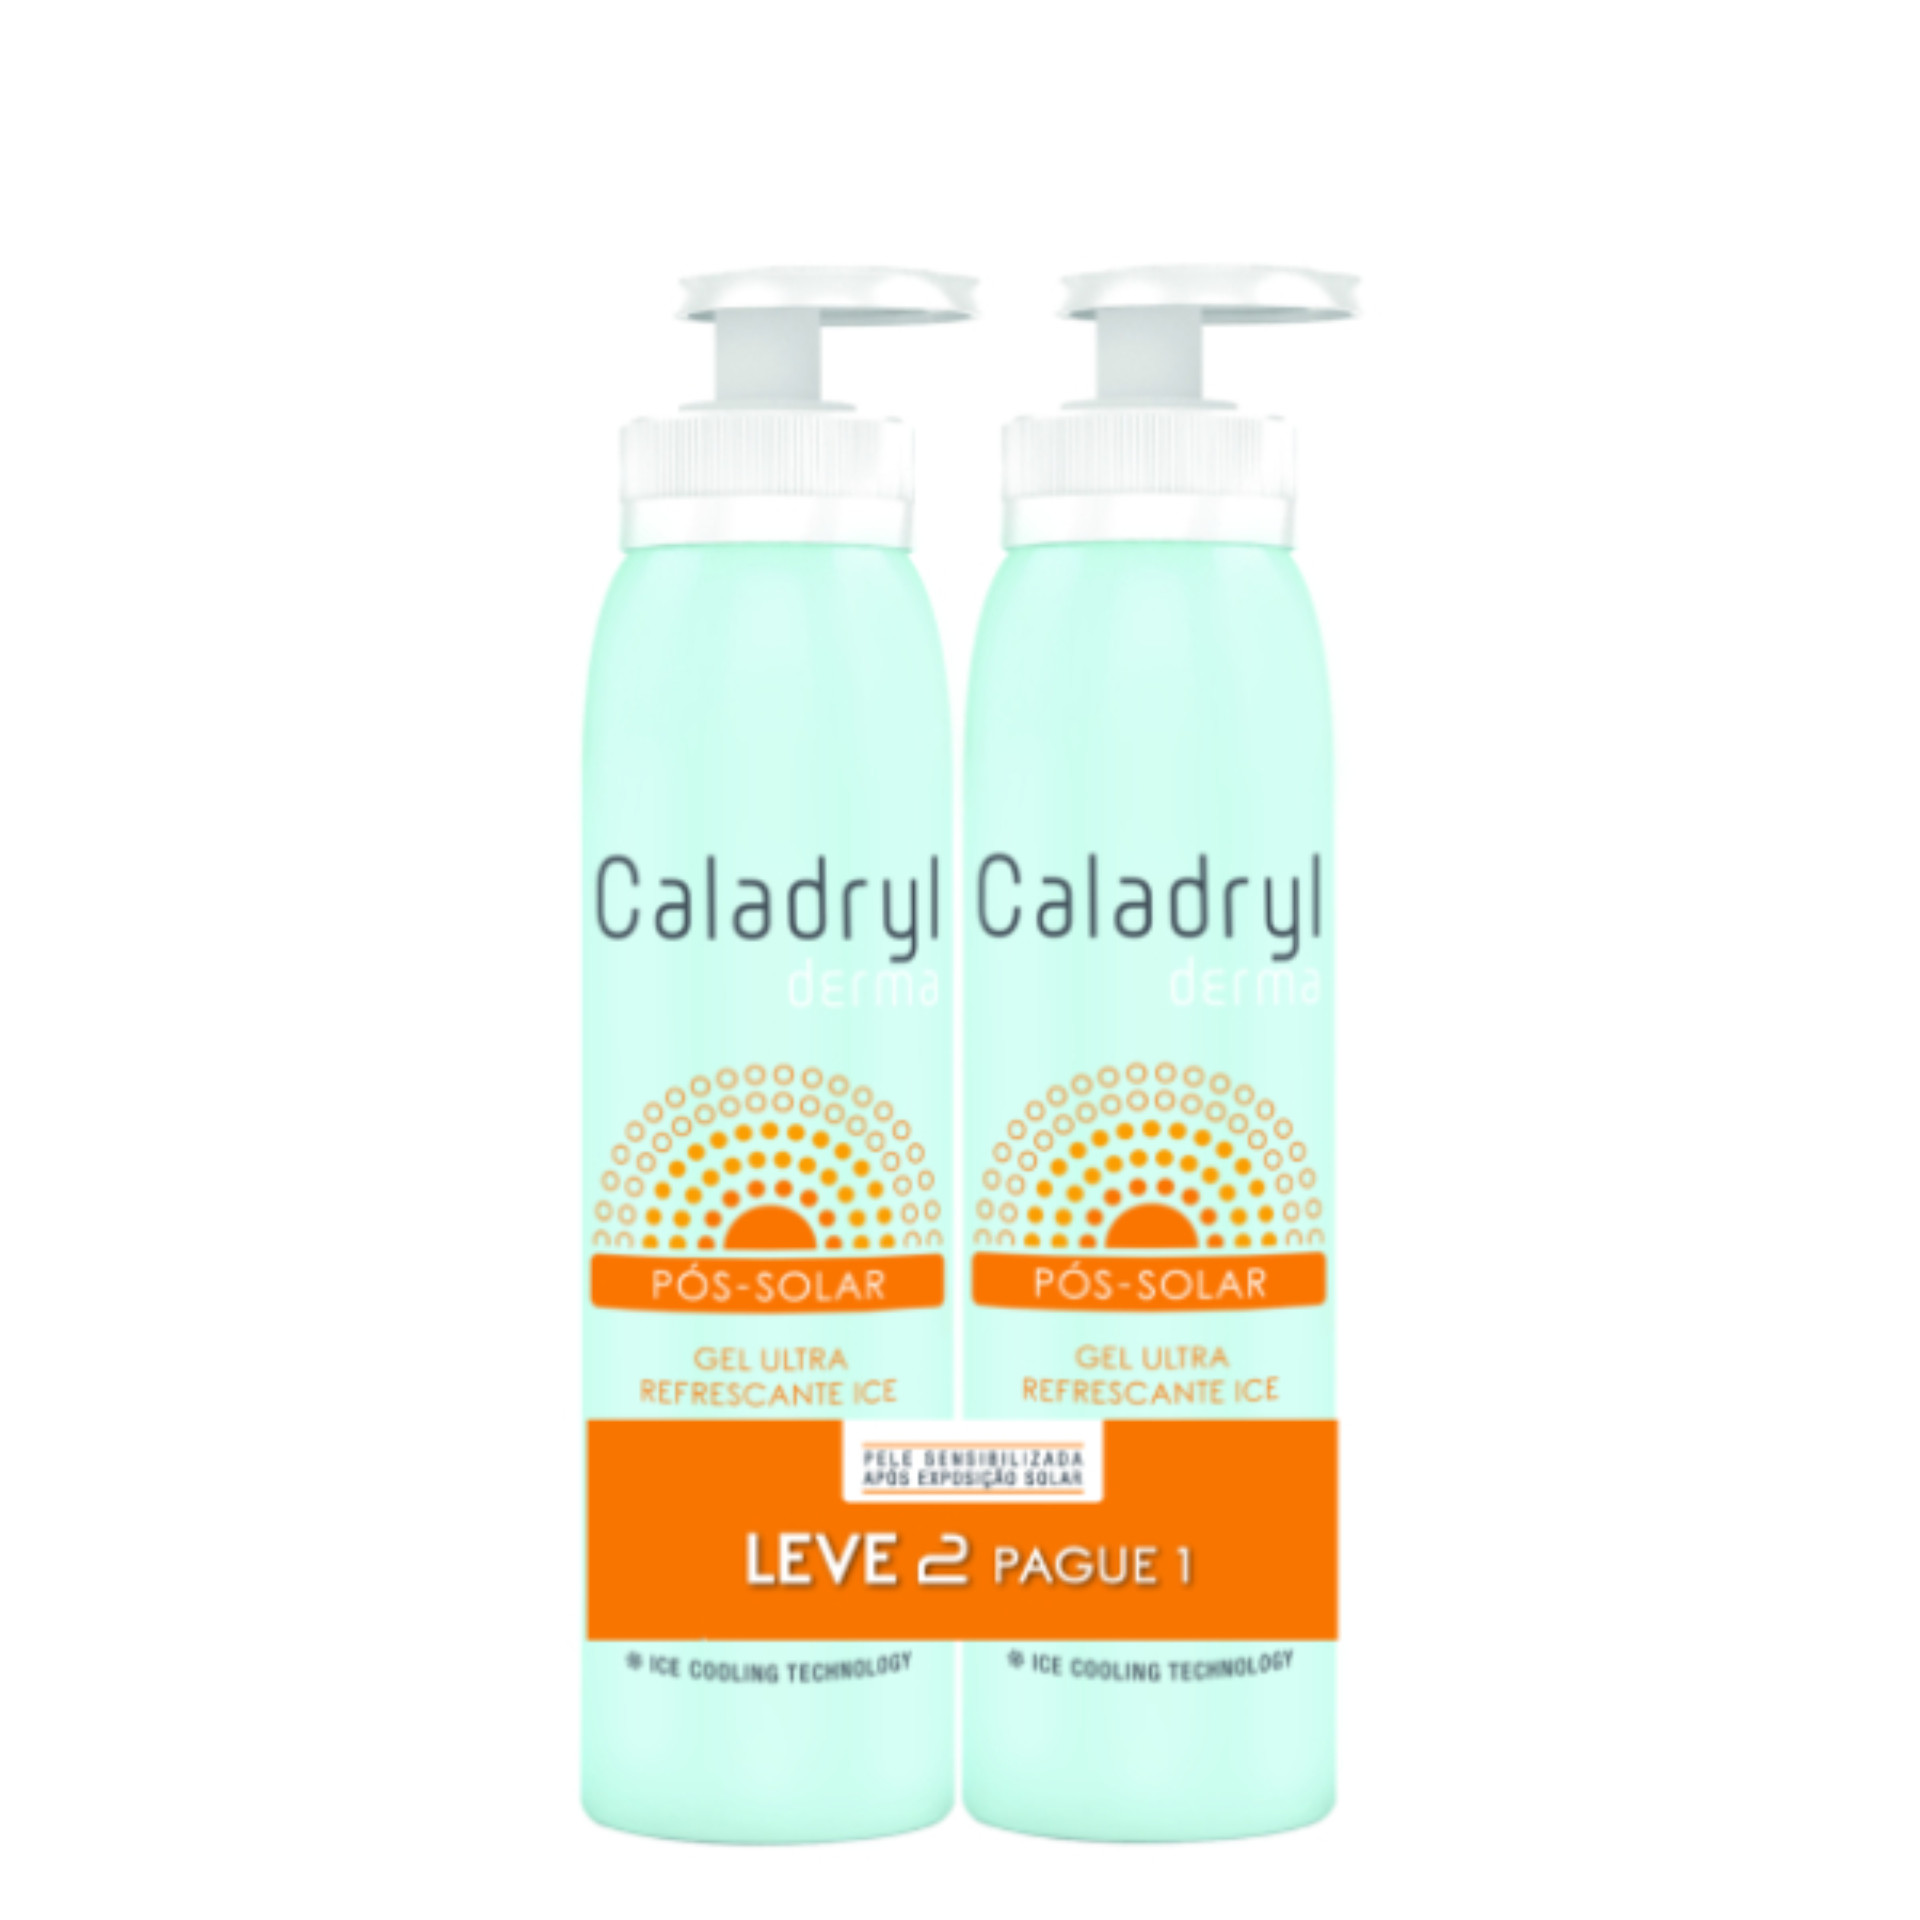 Caladryl Ps-Solar Ice Gel Oferta 2 Embalagem